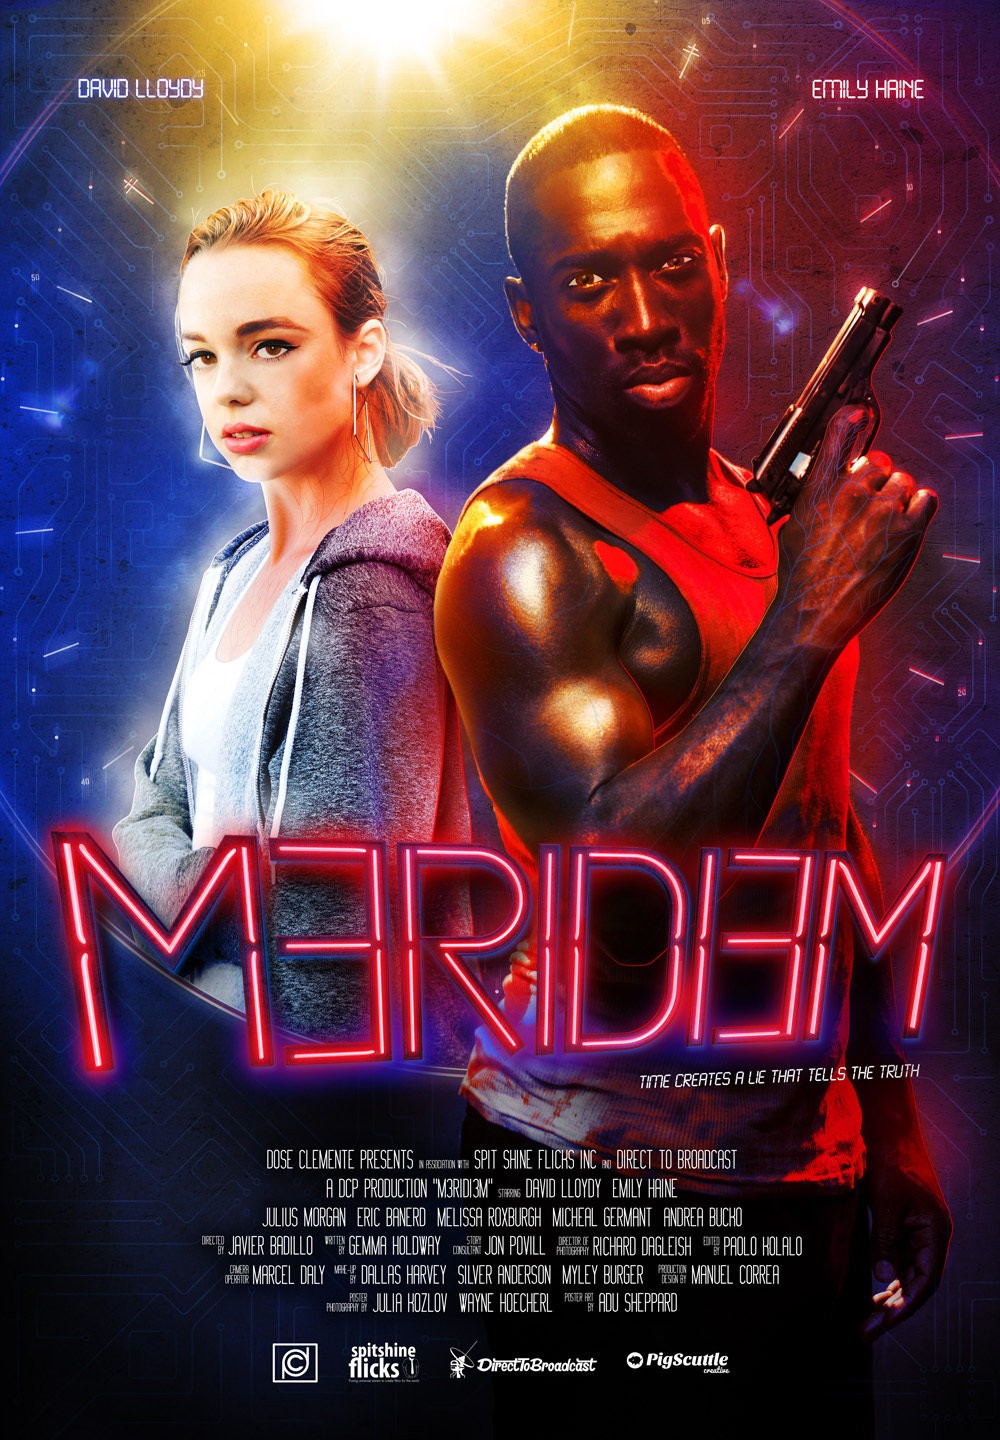 Extra Large Movie Poster Image for Meridiem